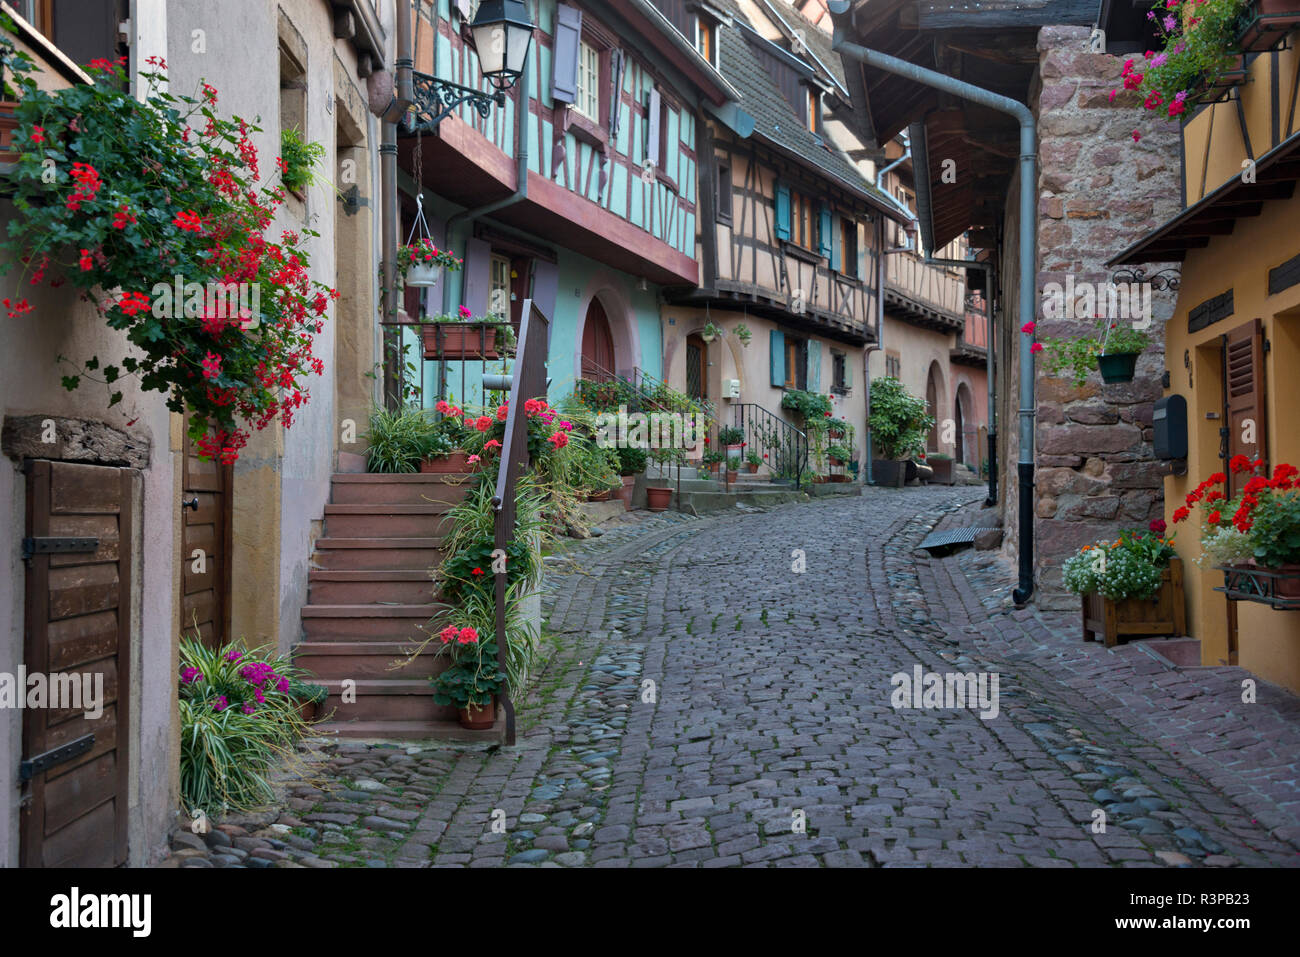 France, Alsace, Eguisheim. A cobblestone street winds between traditional architecture in Eguisheim village. Stock Photo